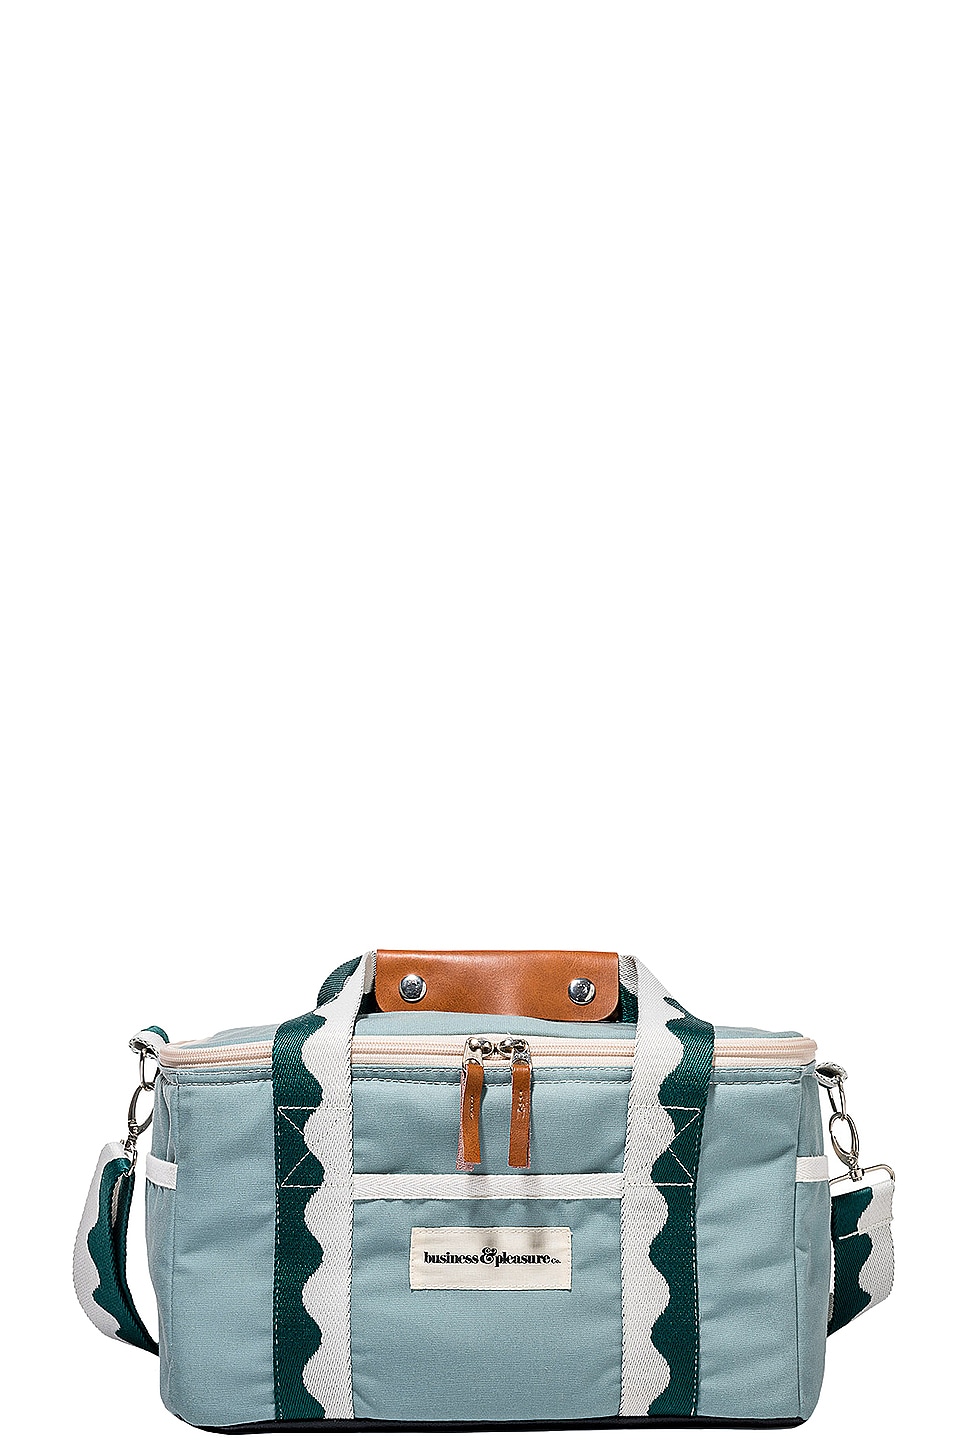 Image 1 of business & pleasure co. Premium Cooler Bag in Riviera Green